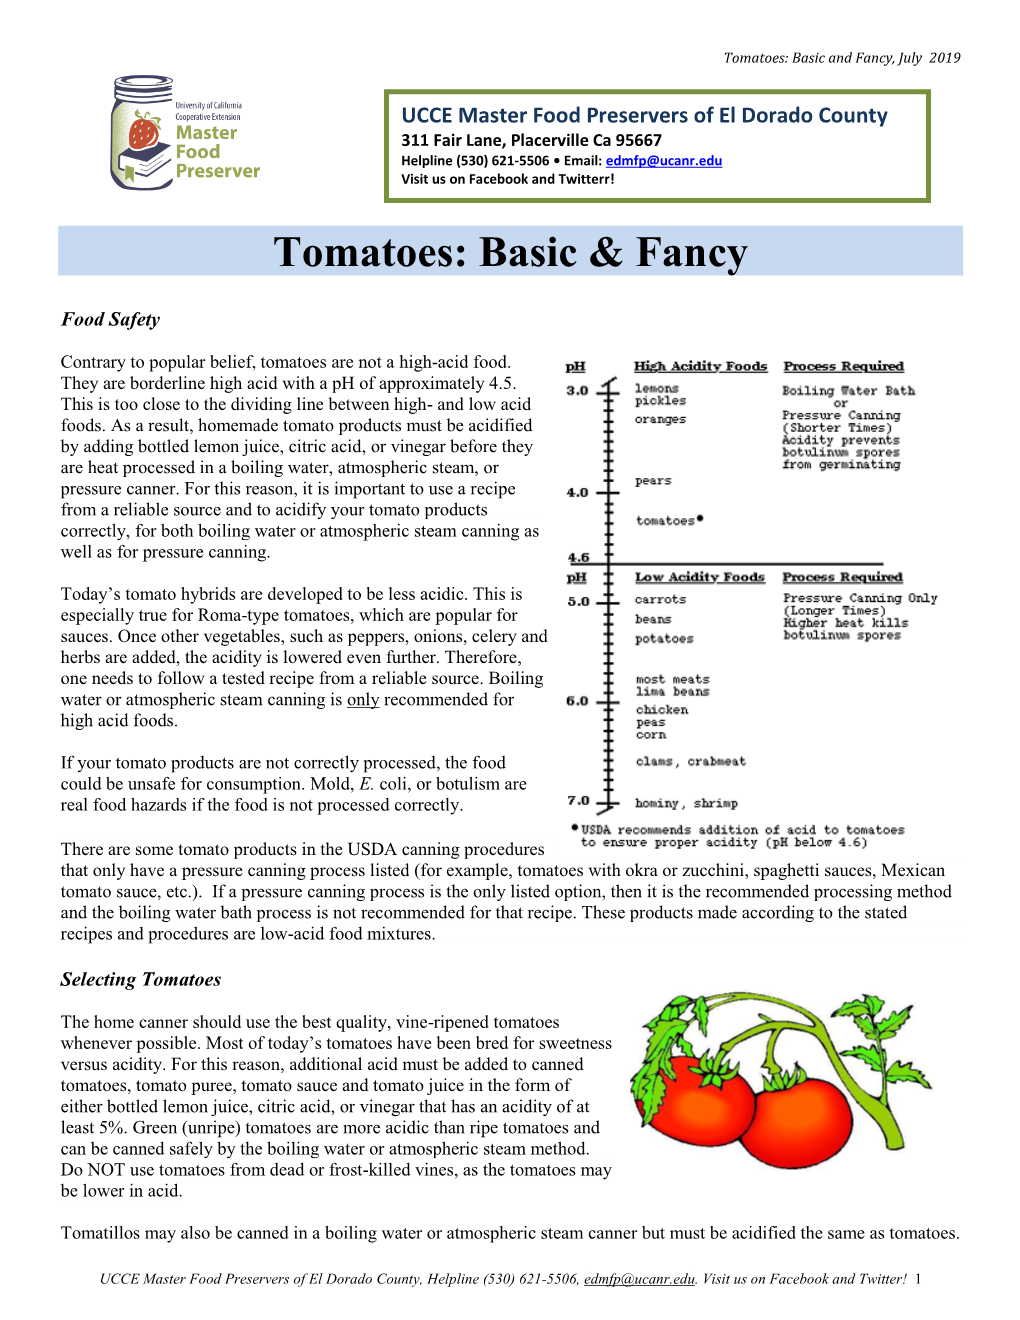 Tomatoes: Basic & Fancy